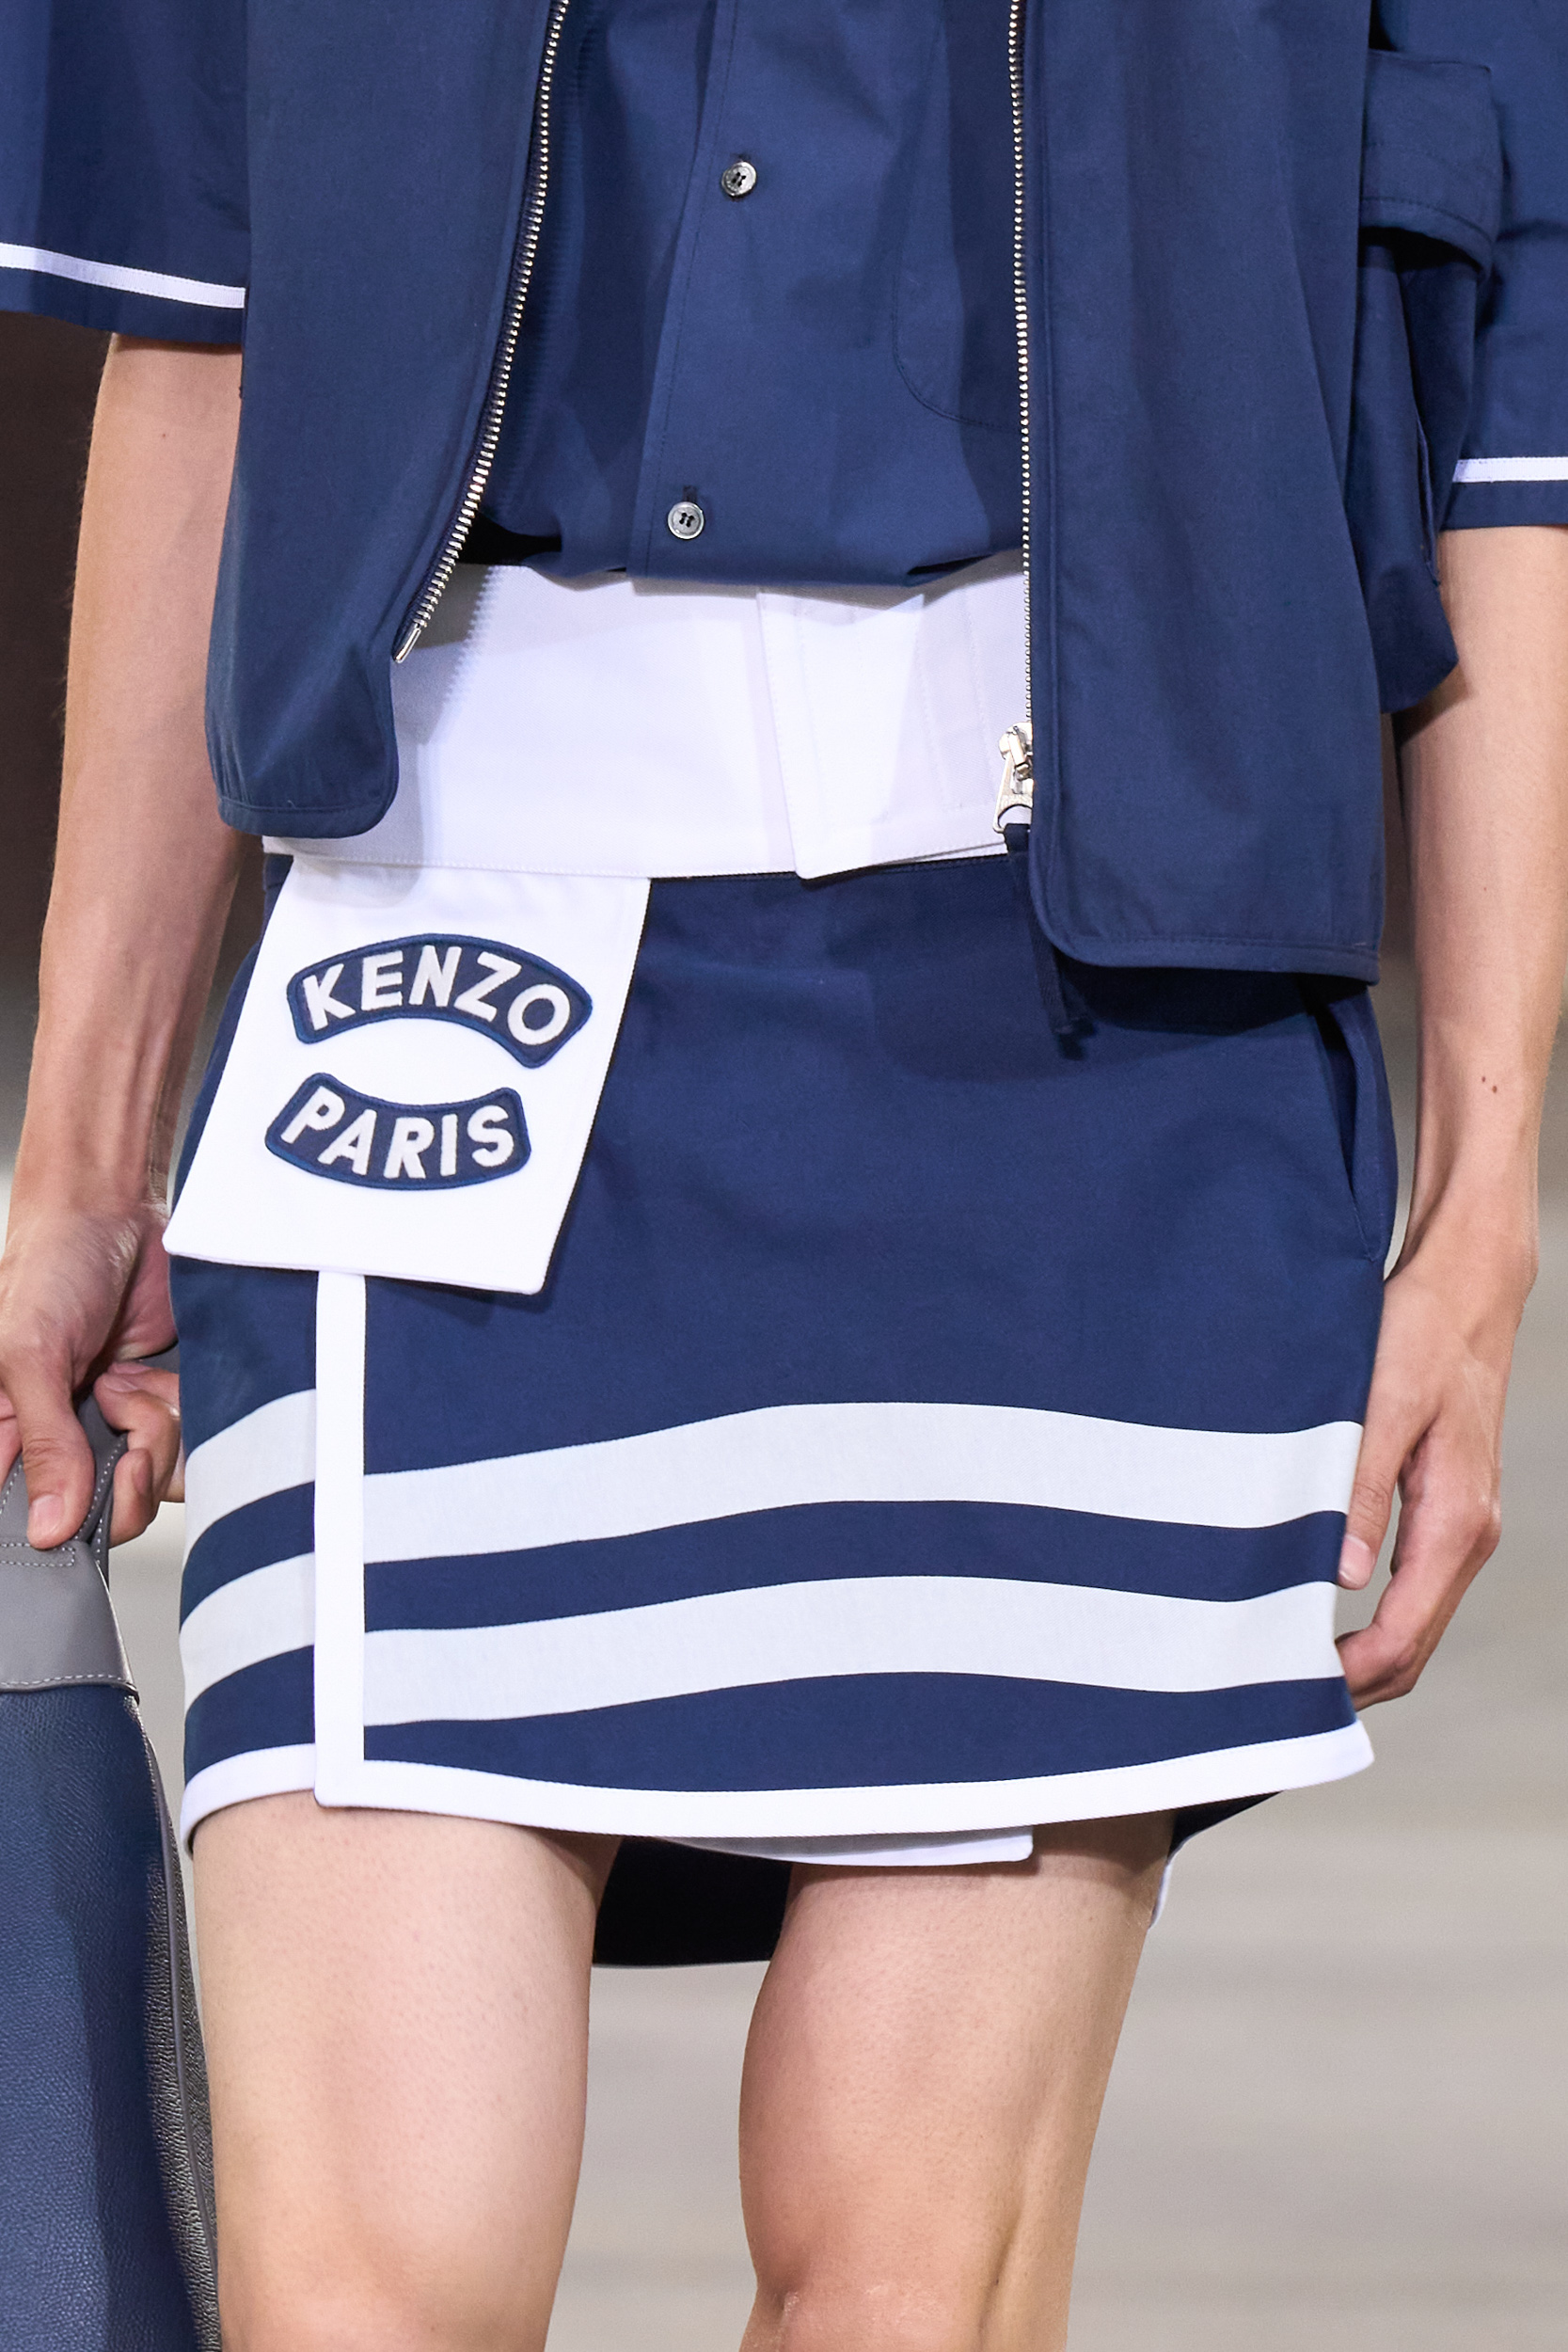 Kenzo Spring 2023 Men's Fashion Show Details Fashion Show